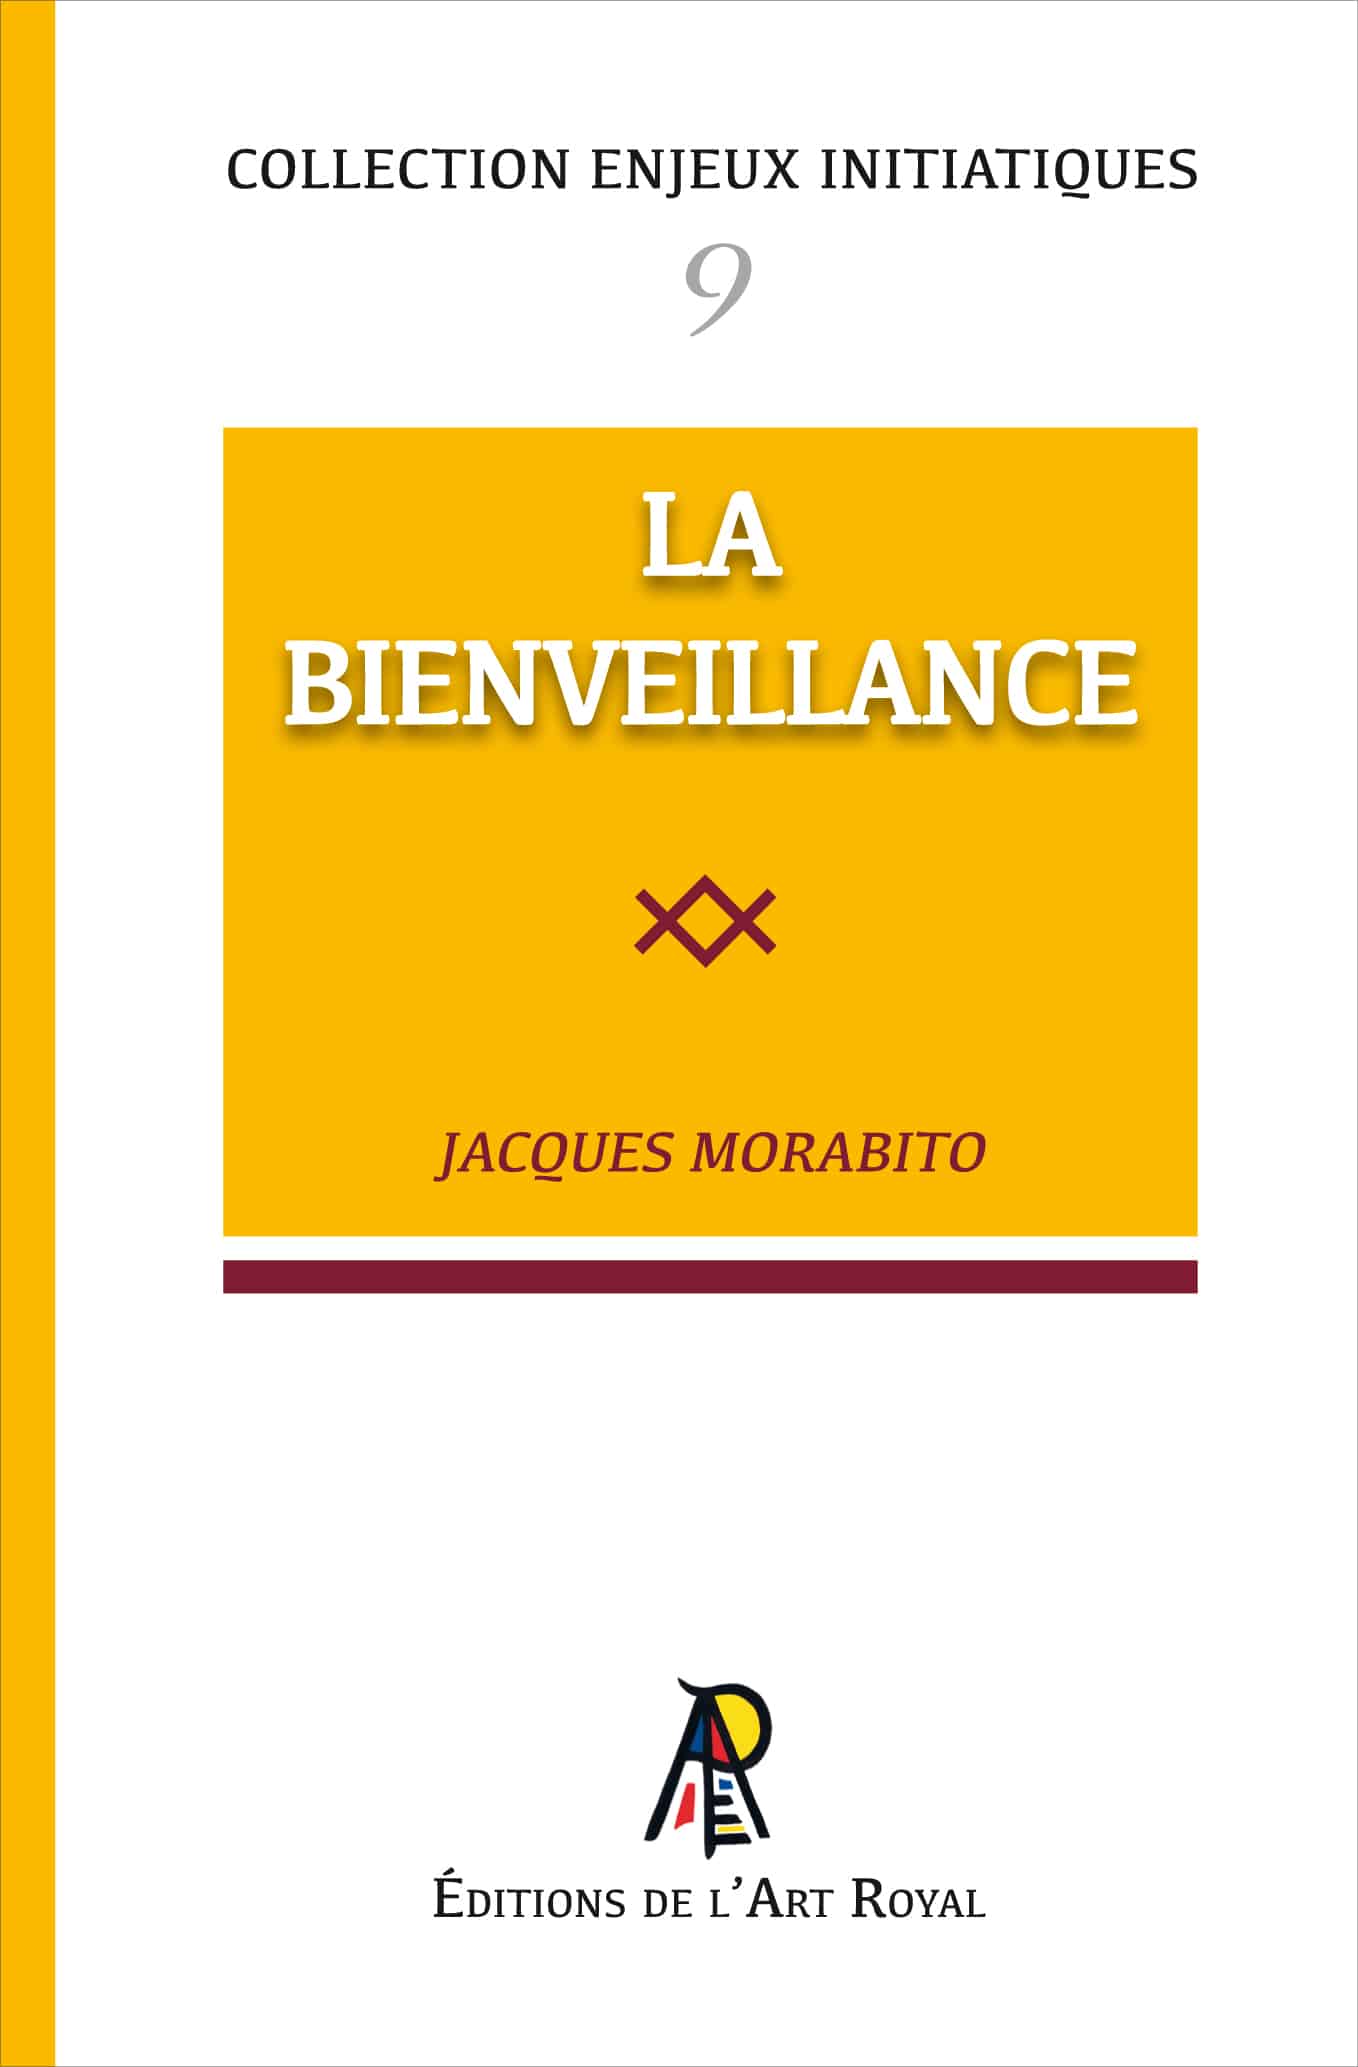 La Bienveillance, Jacques Morabito